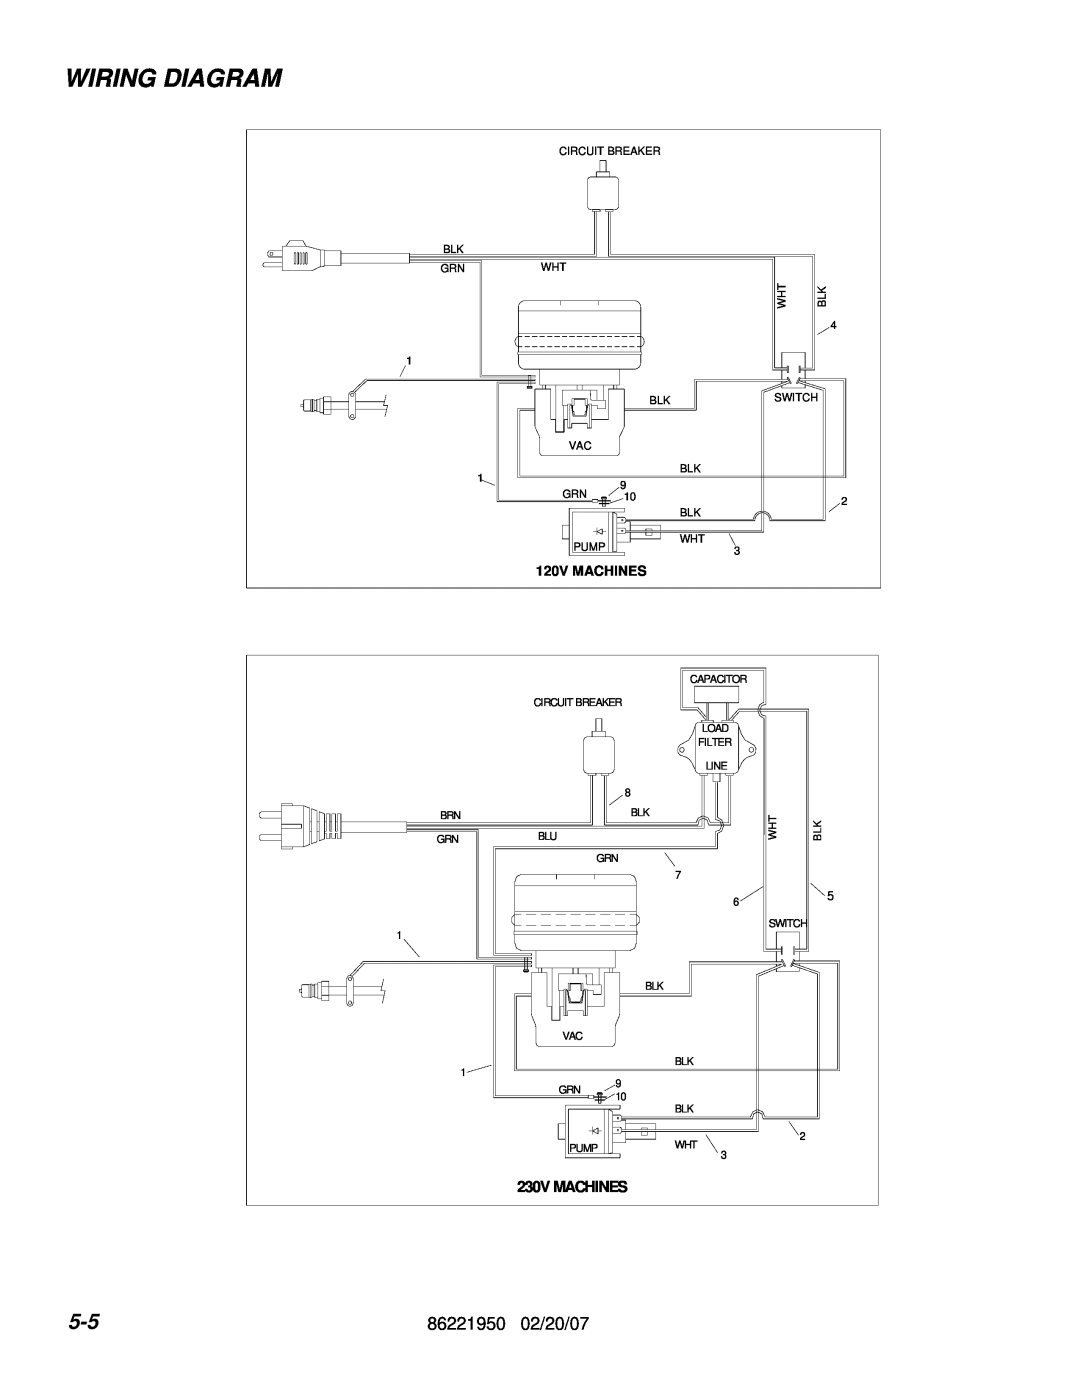 Windsor 86221950 manual Wiring Diagram, 230V MACHINES, 120V MACHINES 